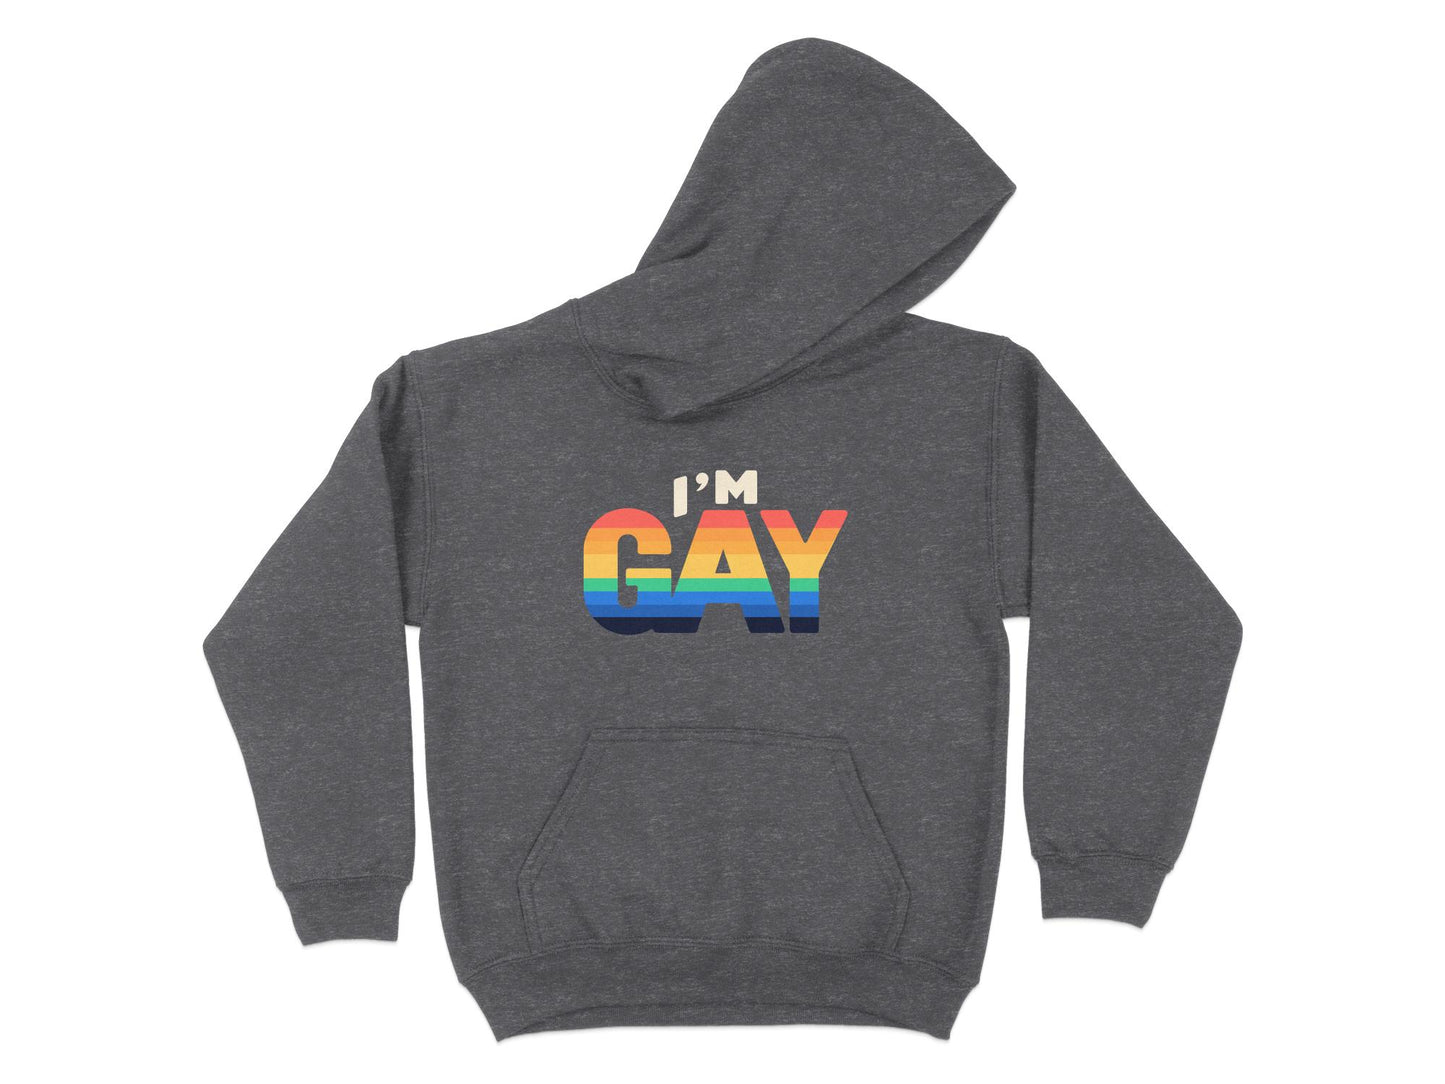 I'm Gay Hoodie, gray